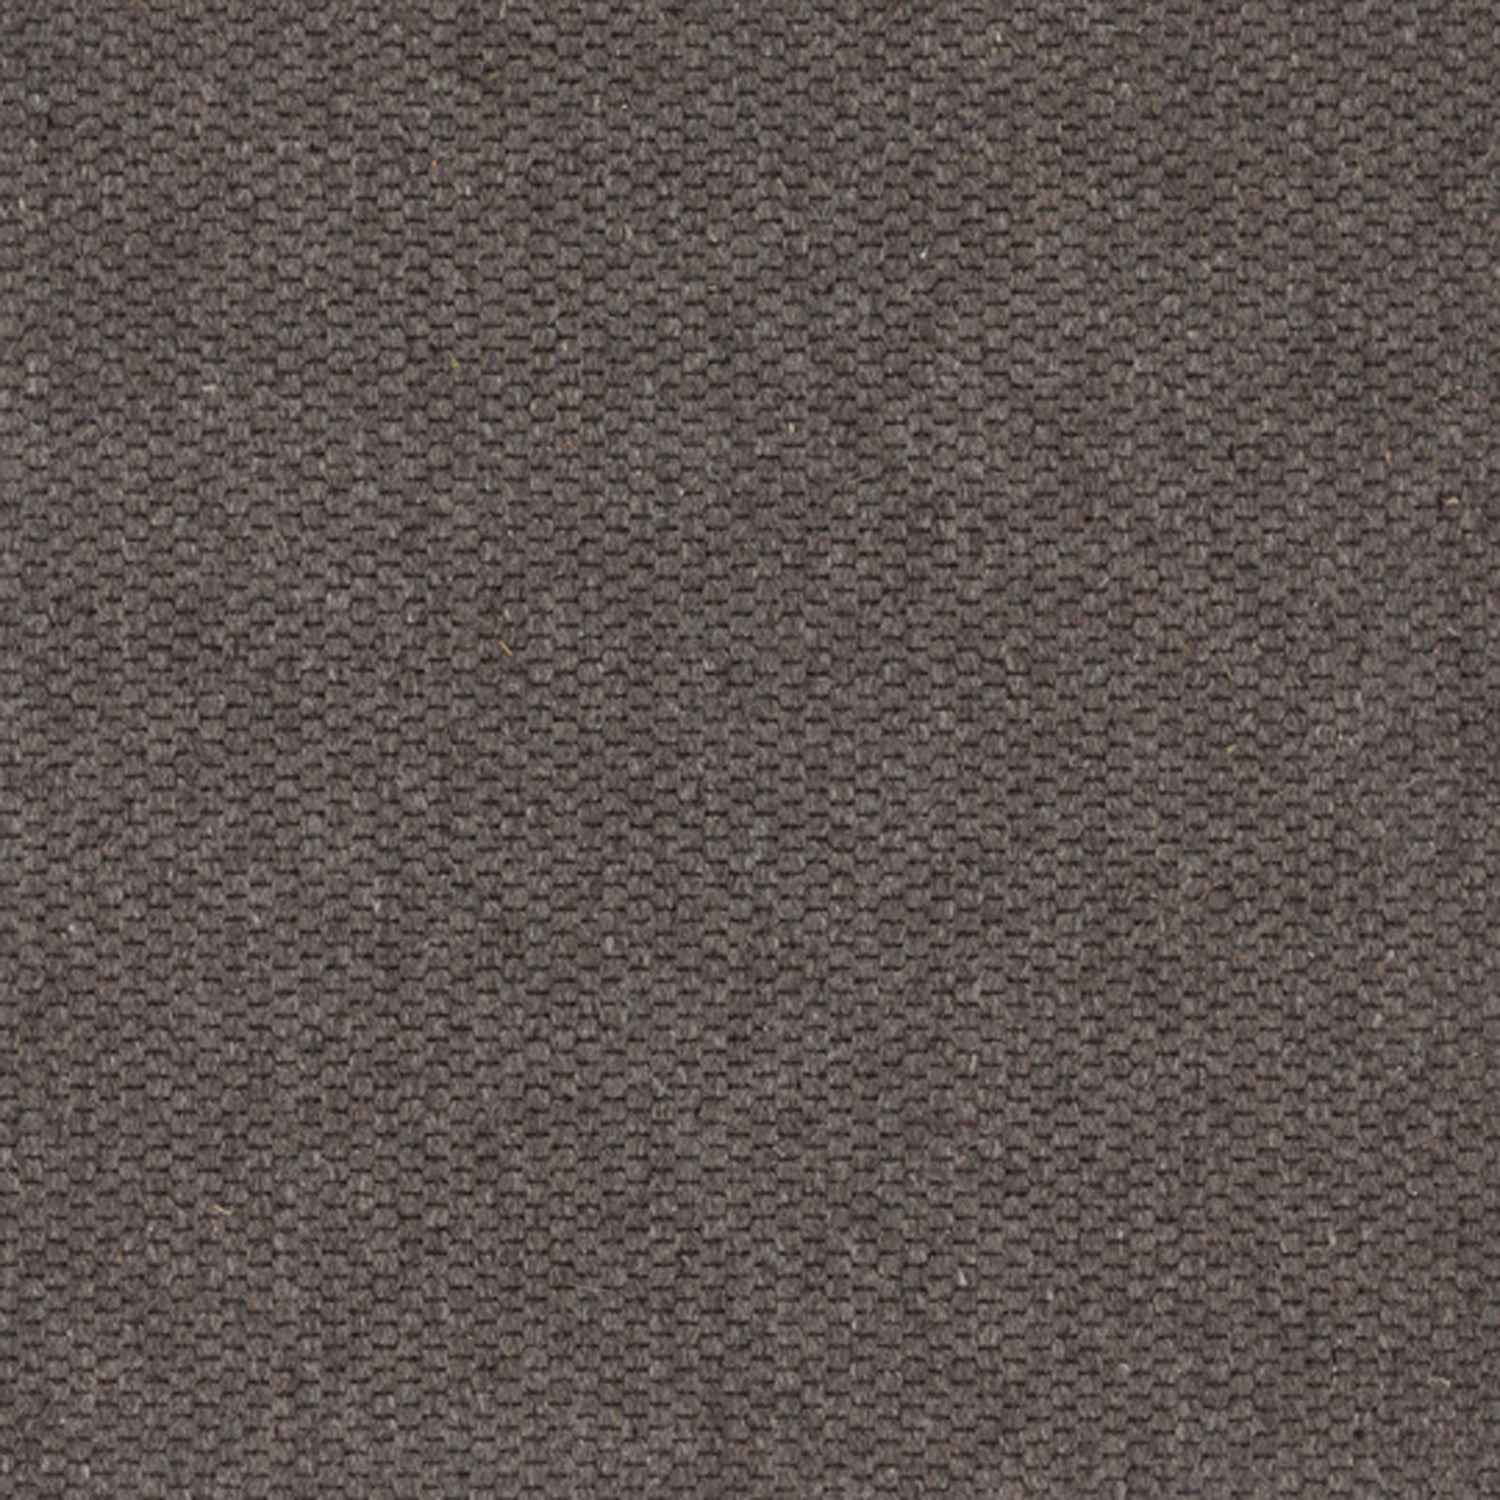 Wool broadloom carpet swatch in a flat grid weave in gray-brown.